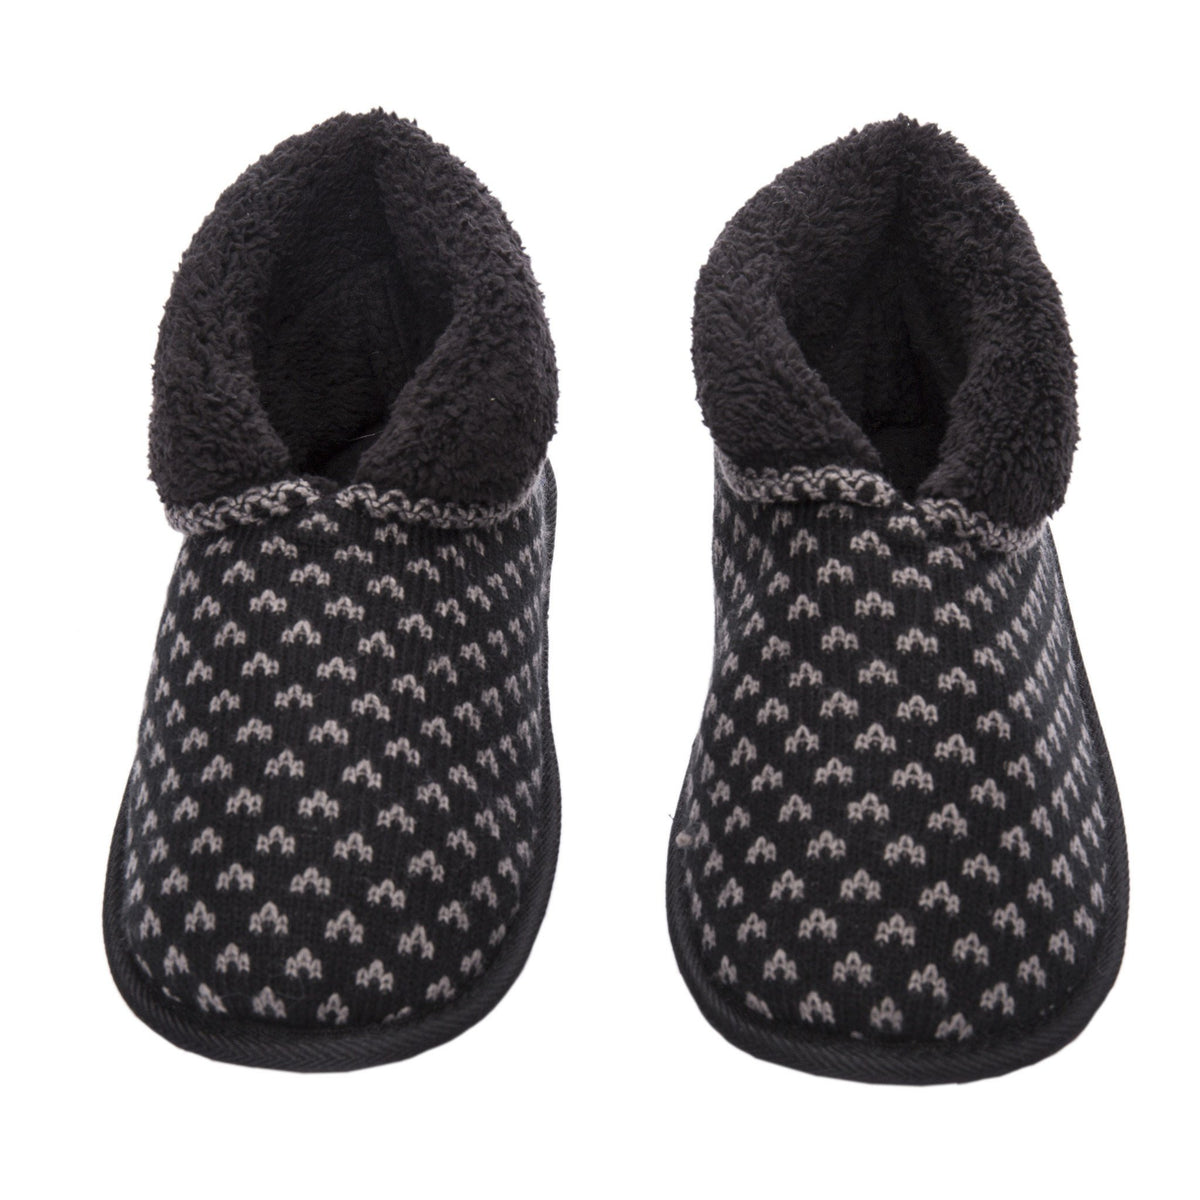 Men's Premium Knit Short Boot Slipper - Black/Charcoal